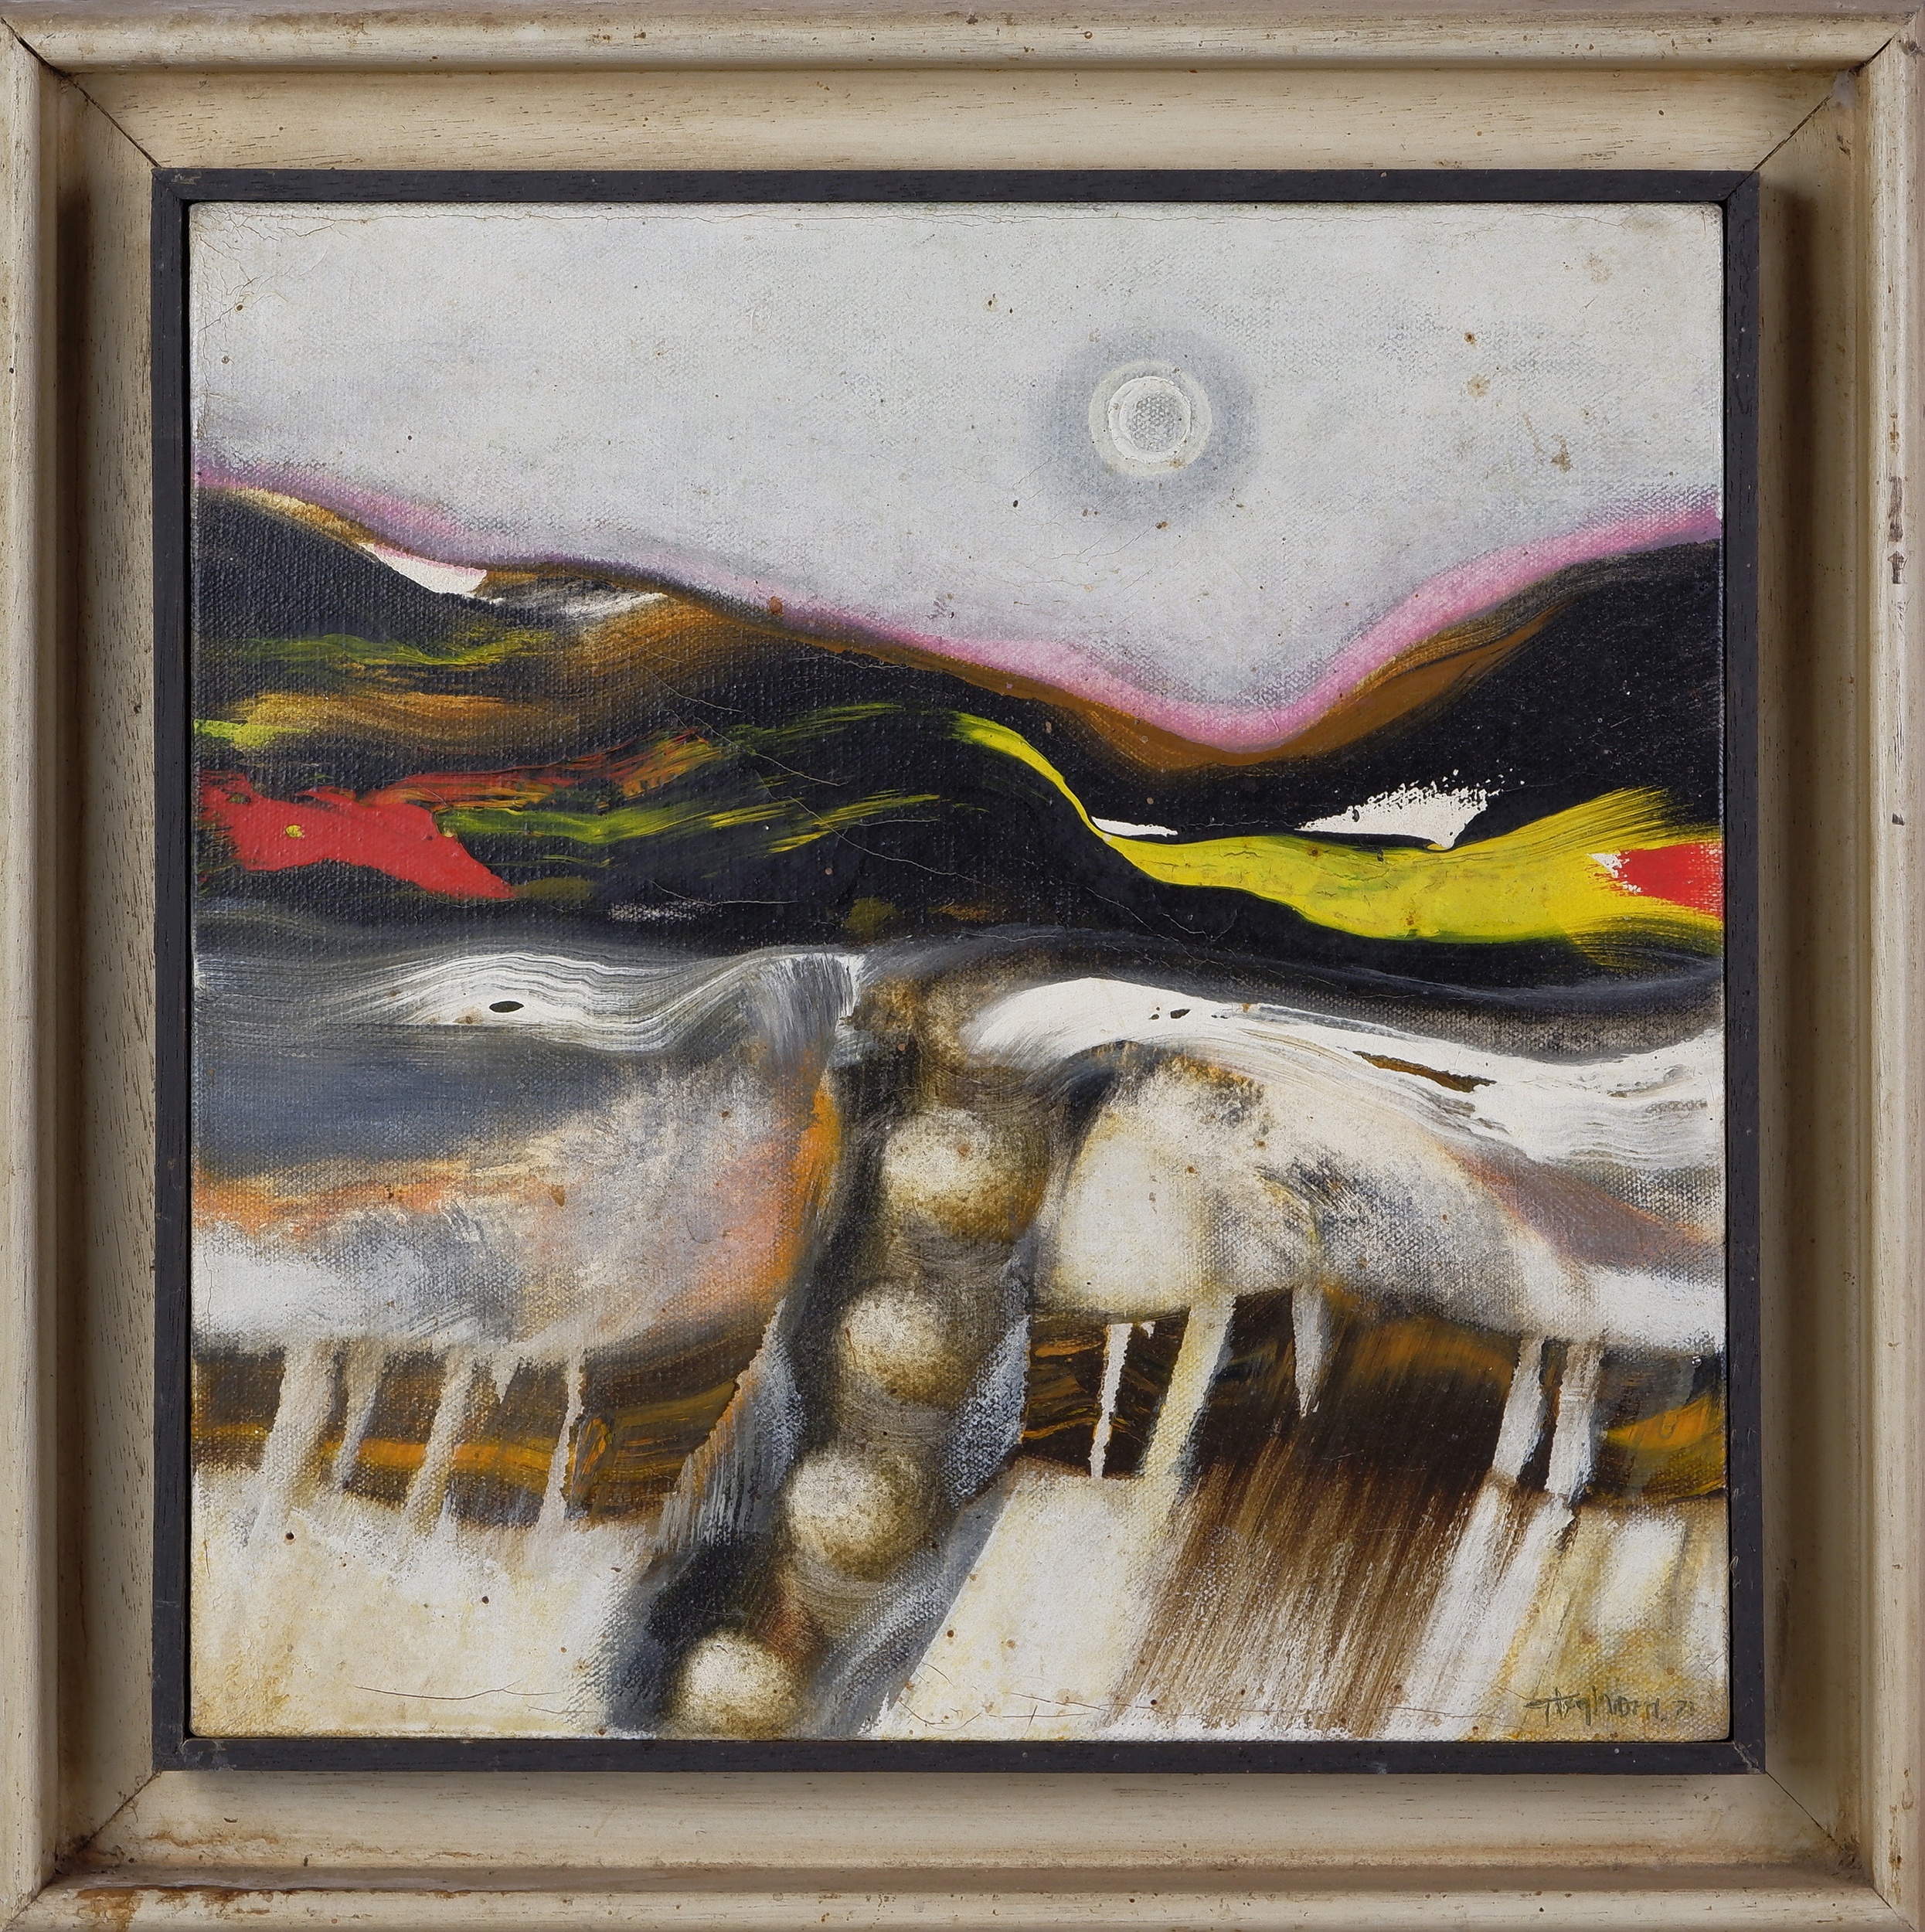 'Thomas Gleghorn (born 1925), Untitled (Landscape) 1971, Oil on Canvas'